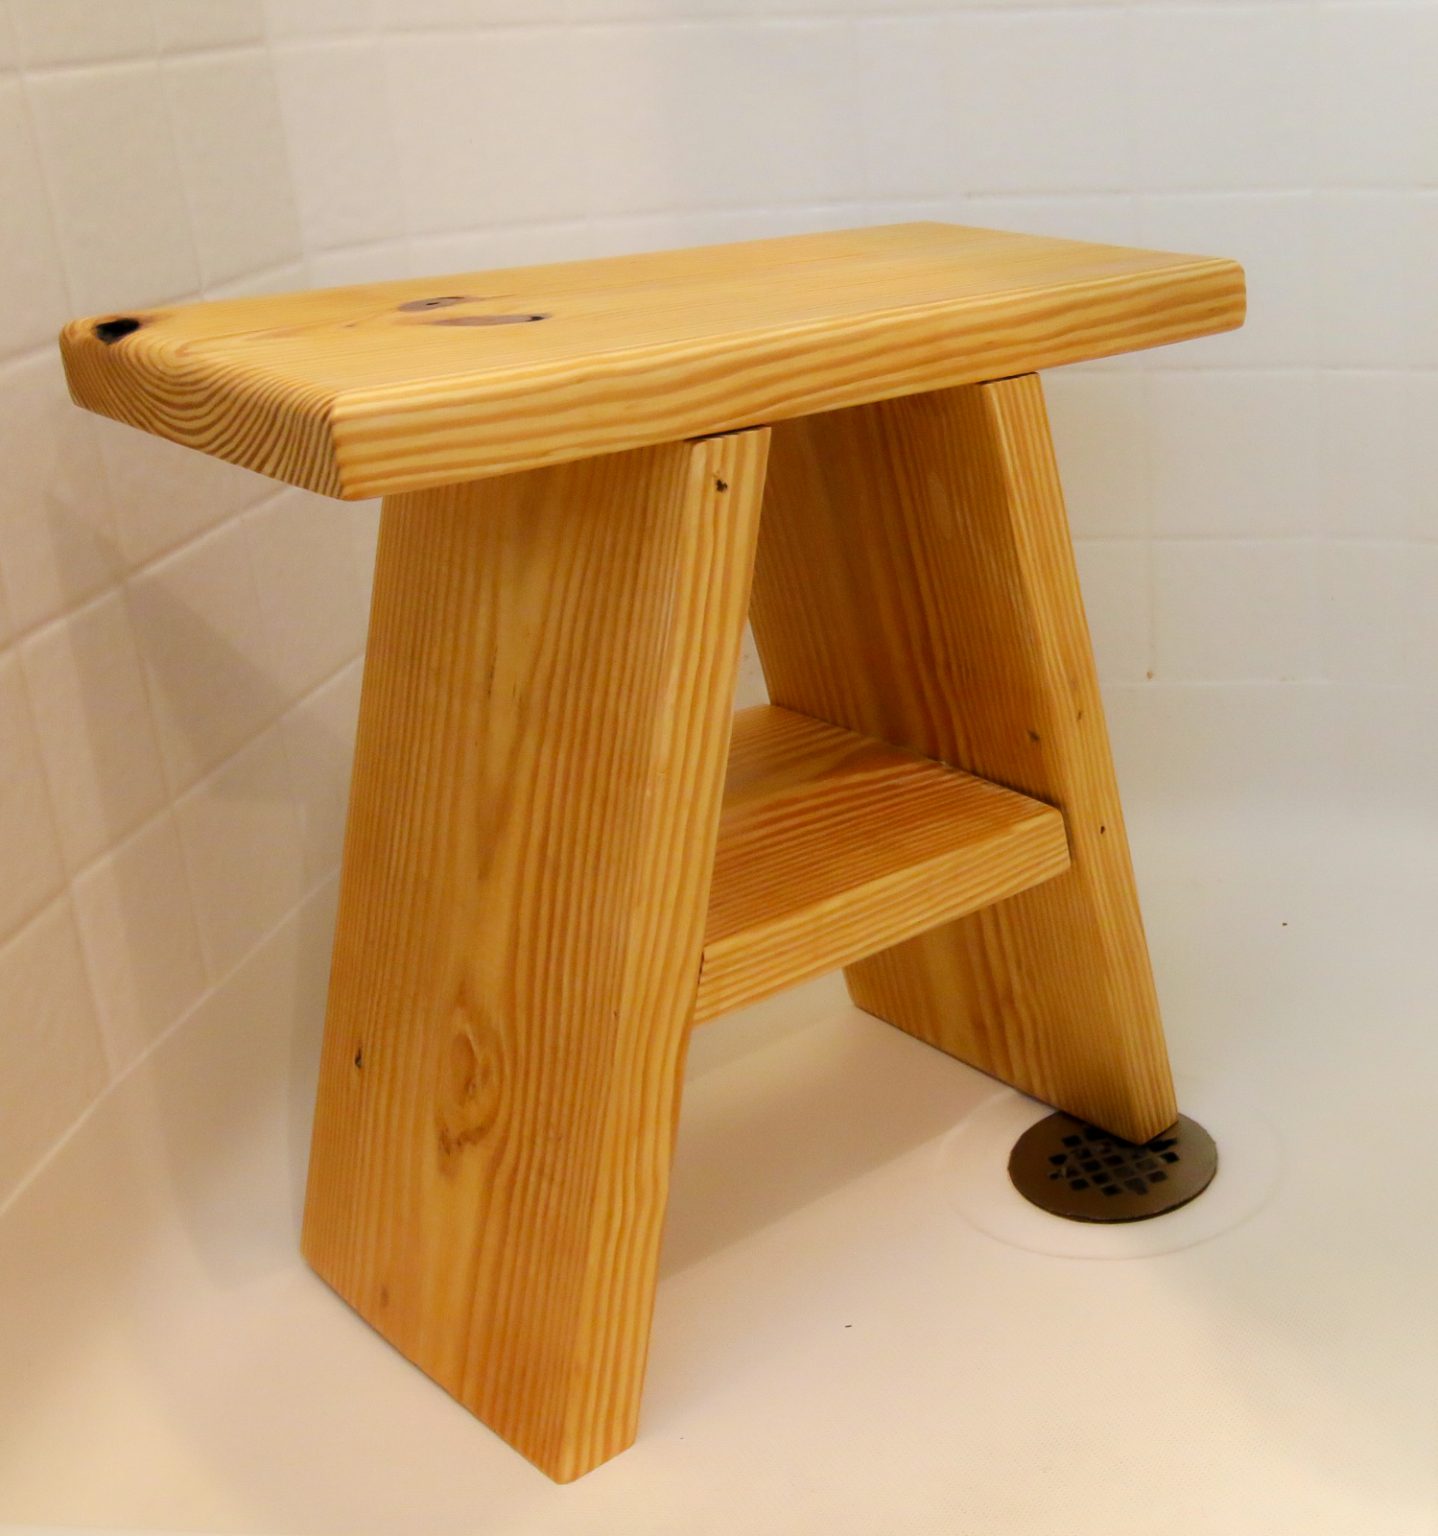 DIY wooden shower stool - FREE PDF Plans!